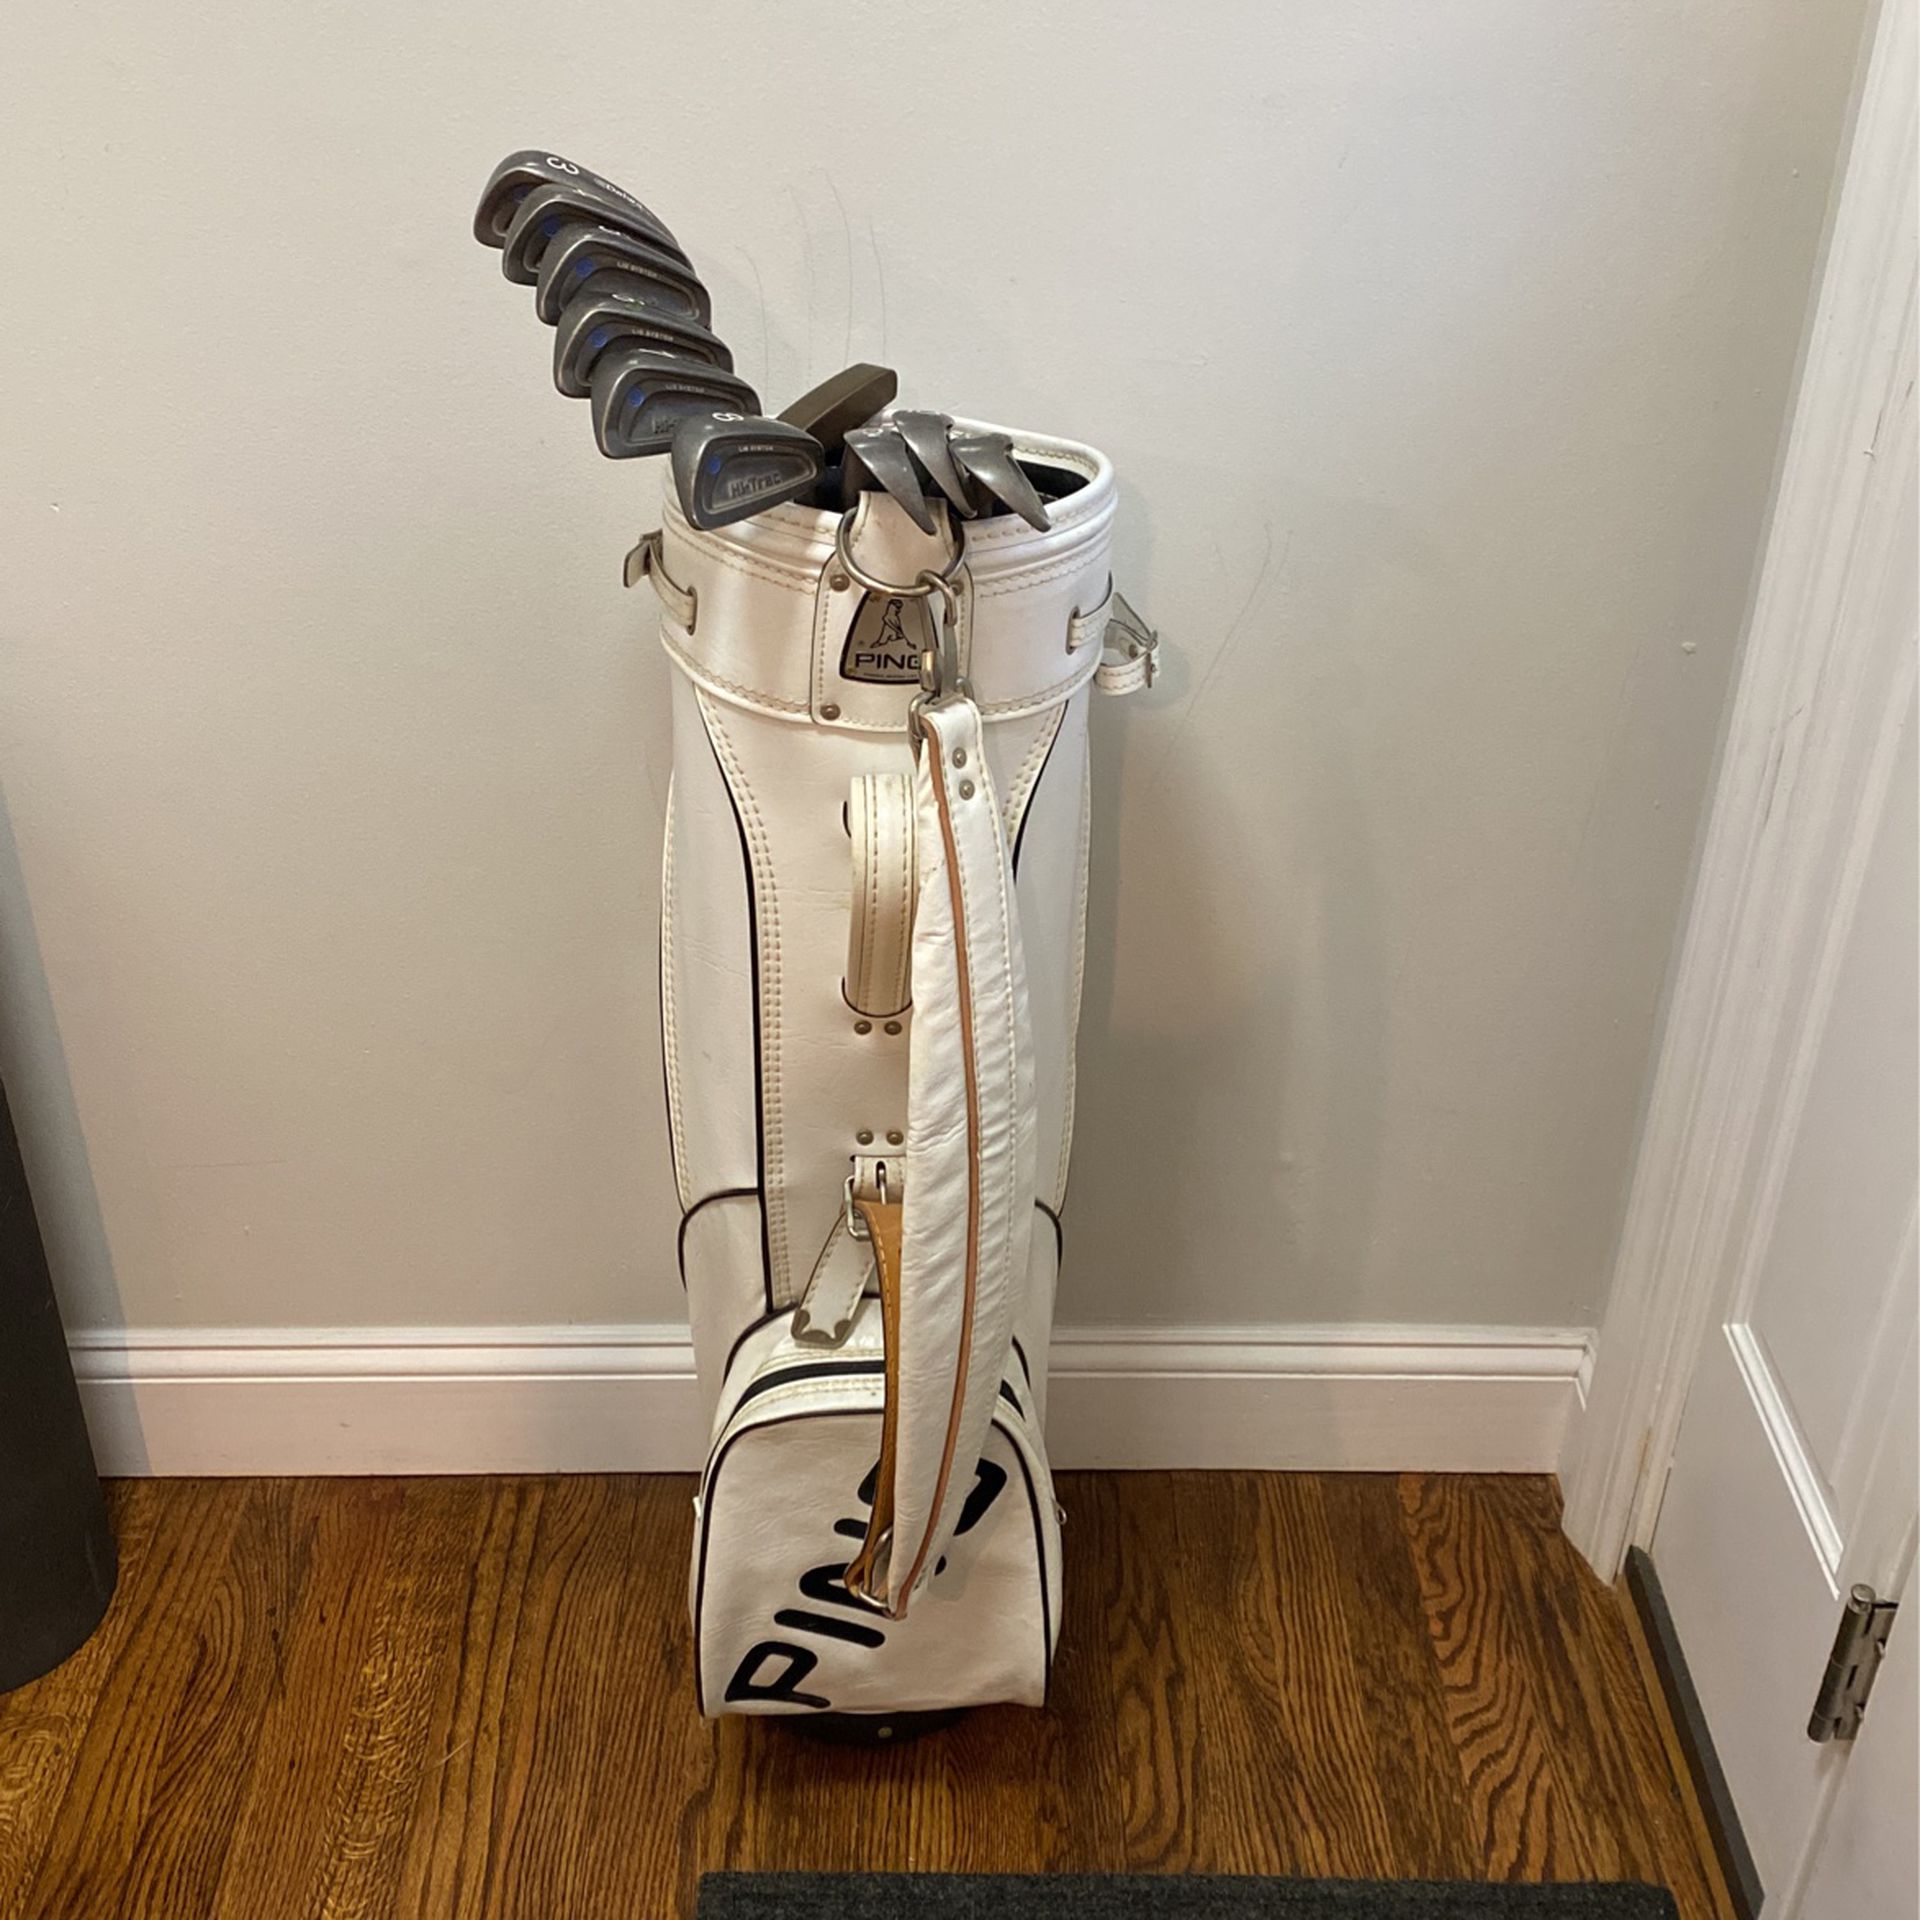 Daiwa Irons, Ping Putter, and a Ping Golf Bag